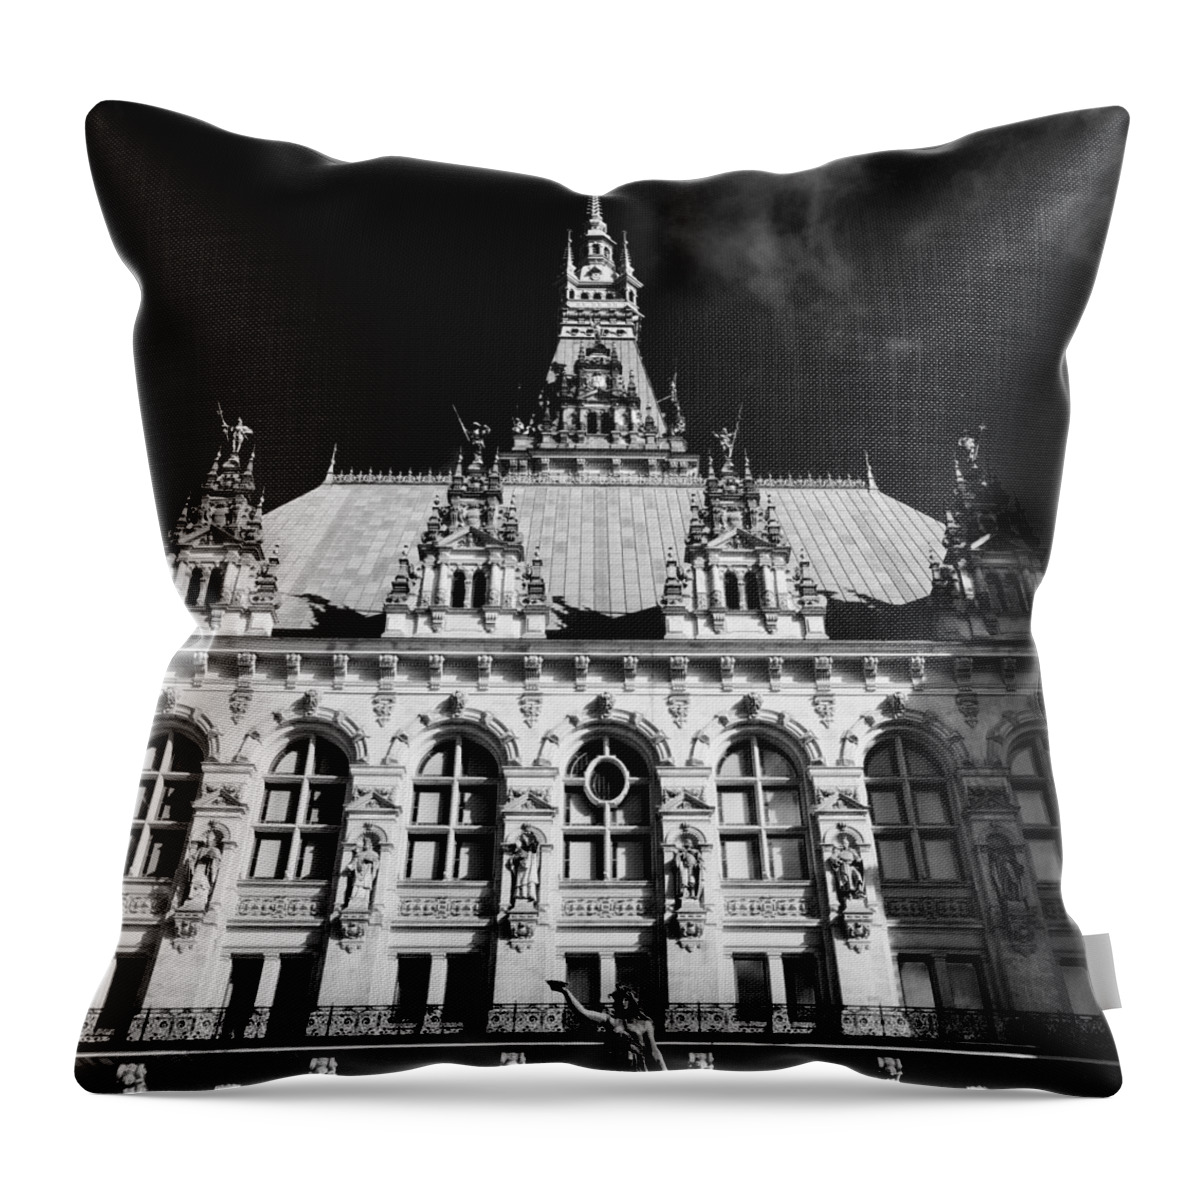 Building Throw Pillow featuring the photograph Hamburg Rathaus by Benjamin Niederlechner